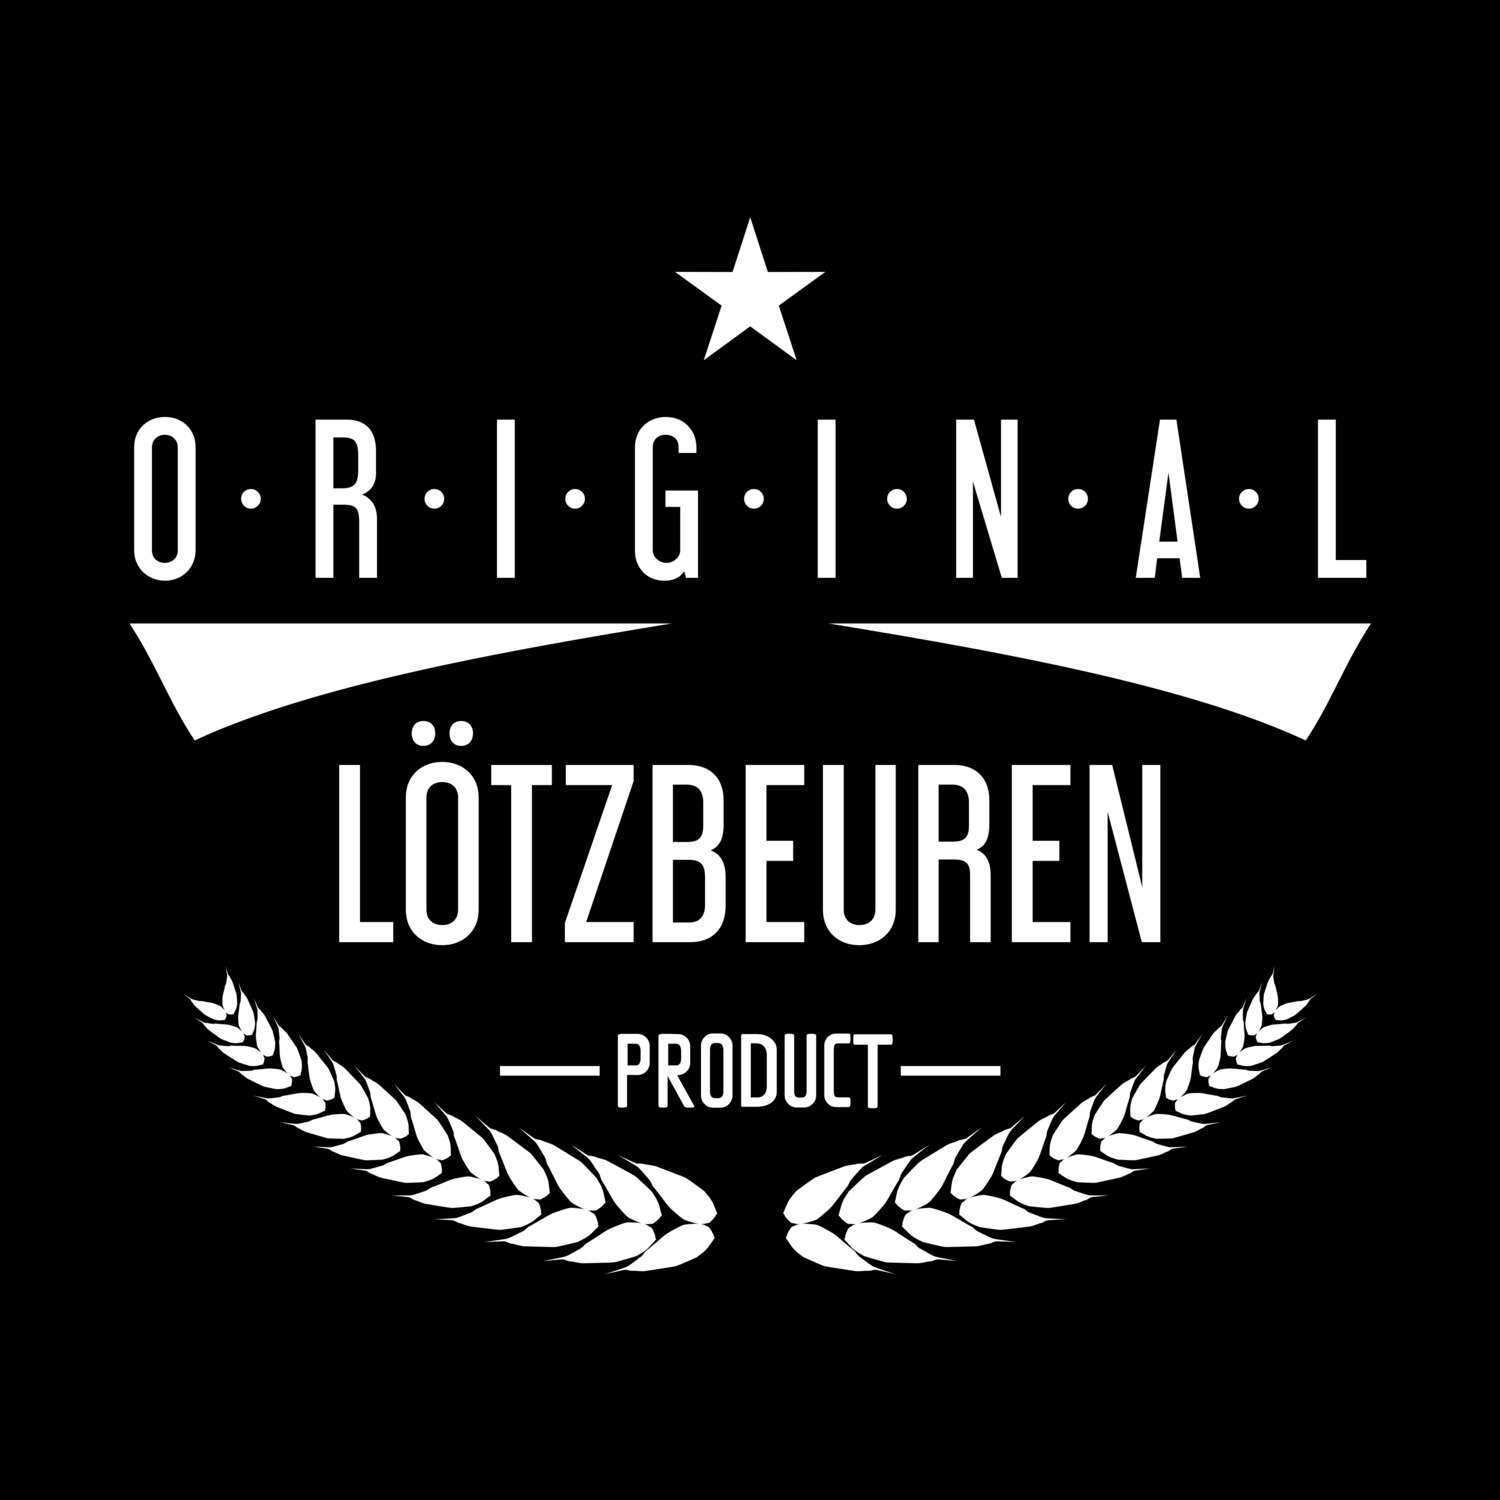 Lötzbeuren T-Shirt »Original Product«